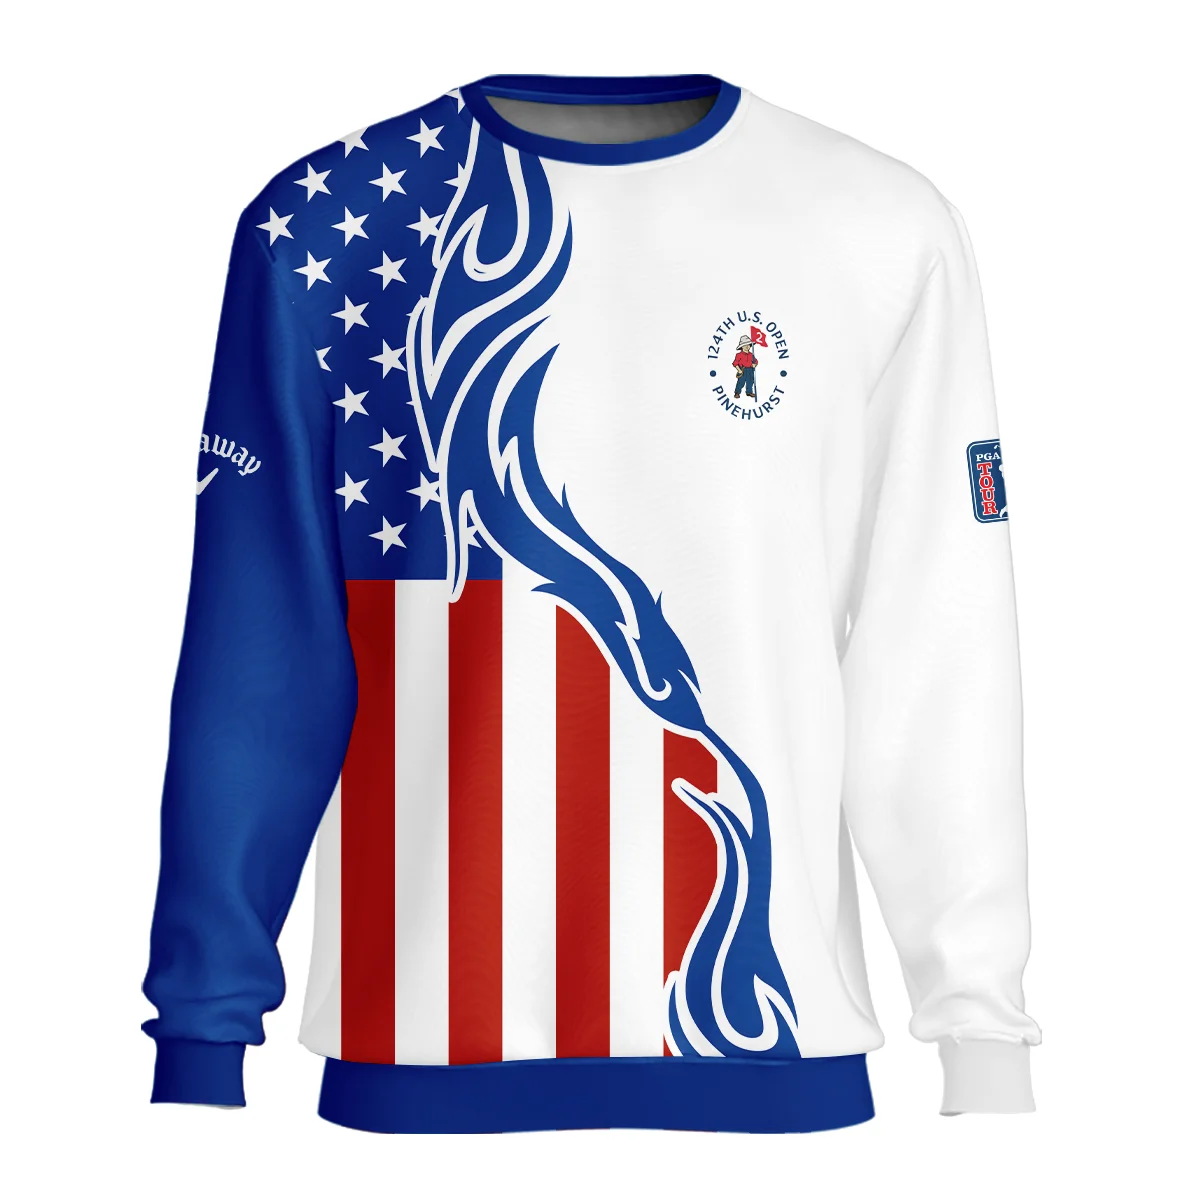 Golf Sport Callaway 124th U.S. Open Pinehurst Unisex Sweatshirt USA Flag Pattern Blue White All Over Print Sweatshirt